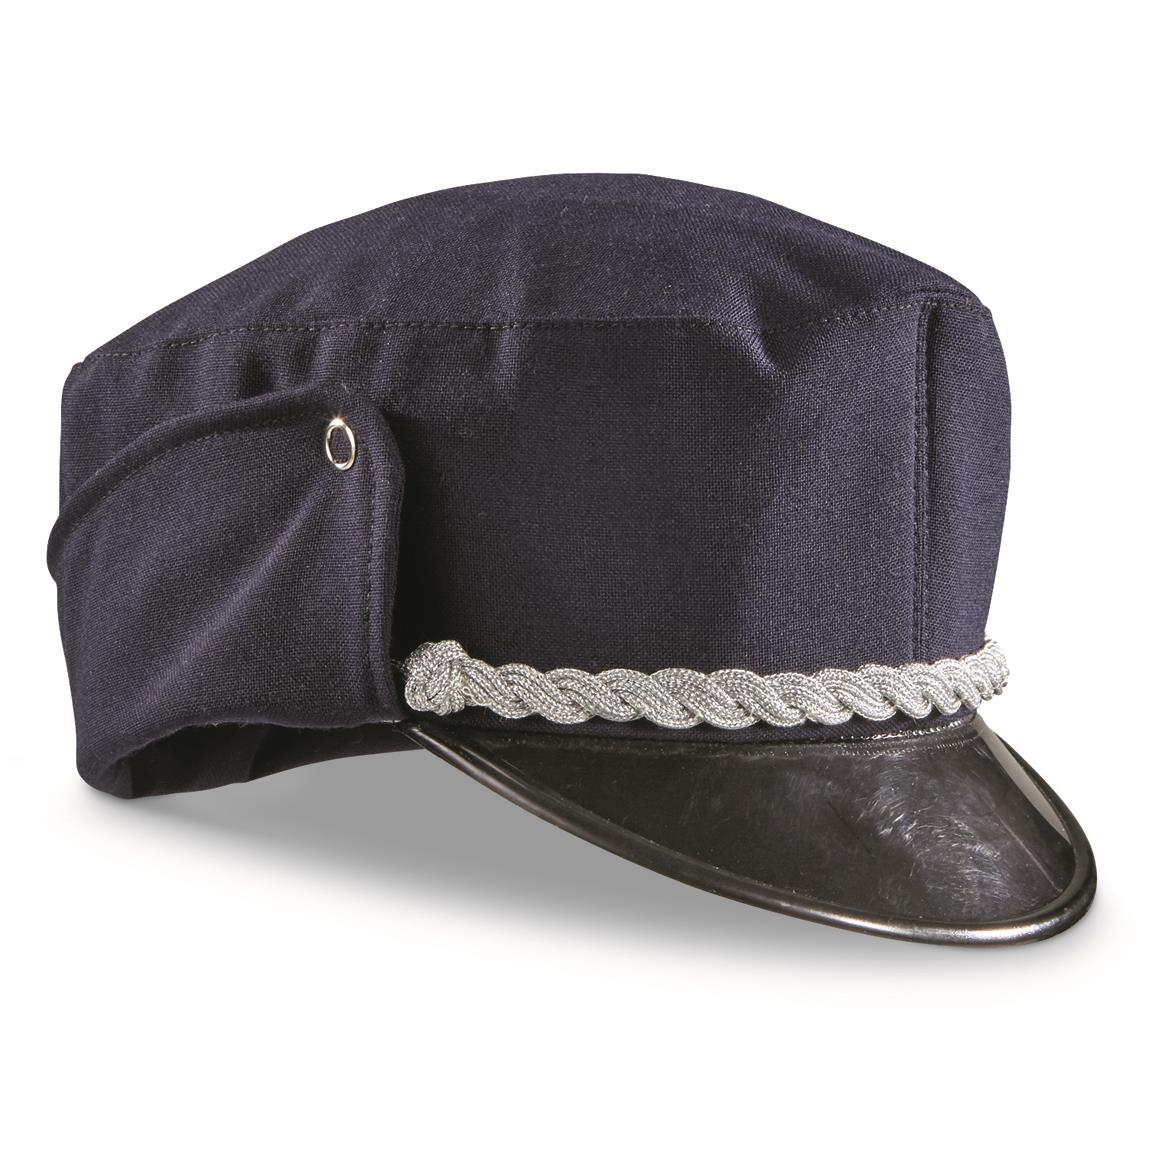 Hungarian Police Surplus Officer's Cap, New, Black